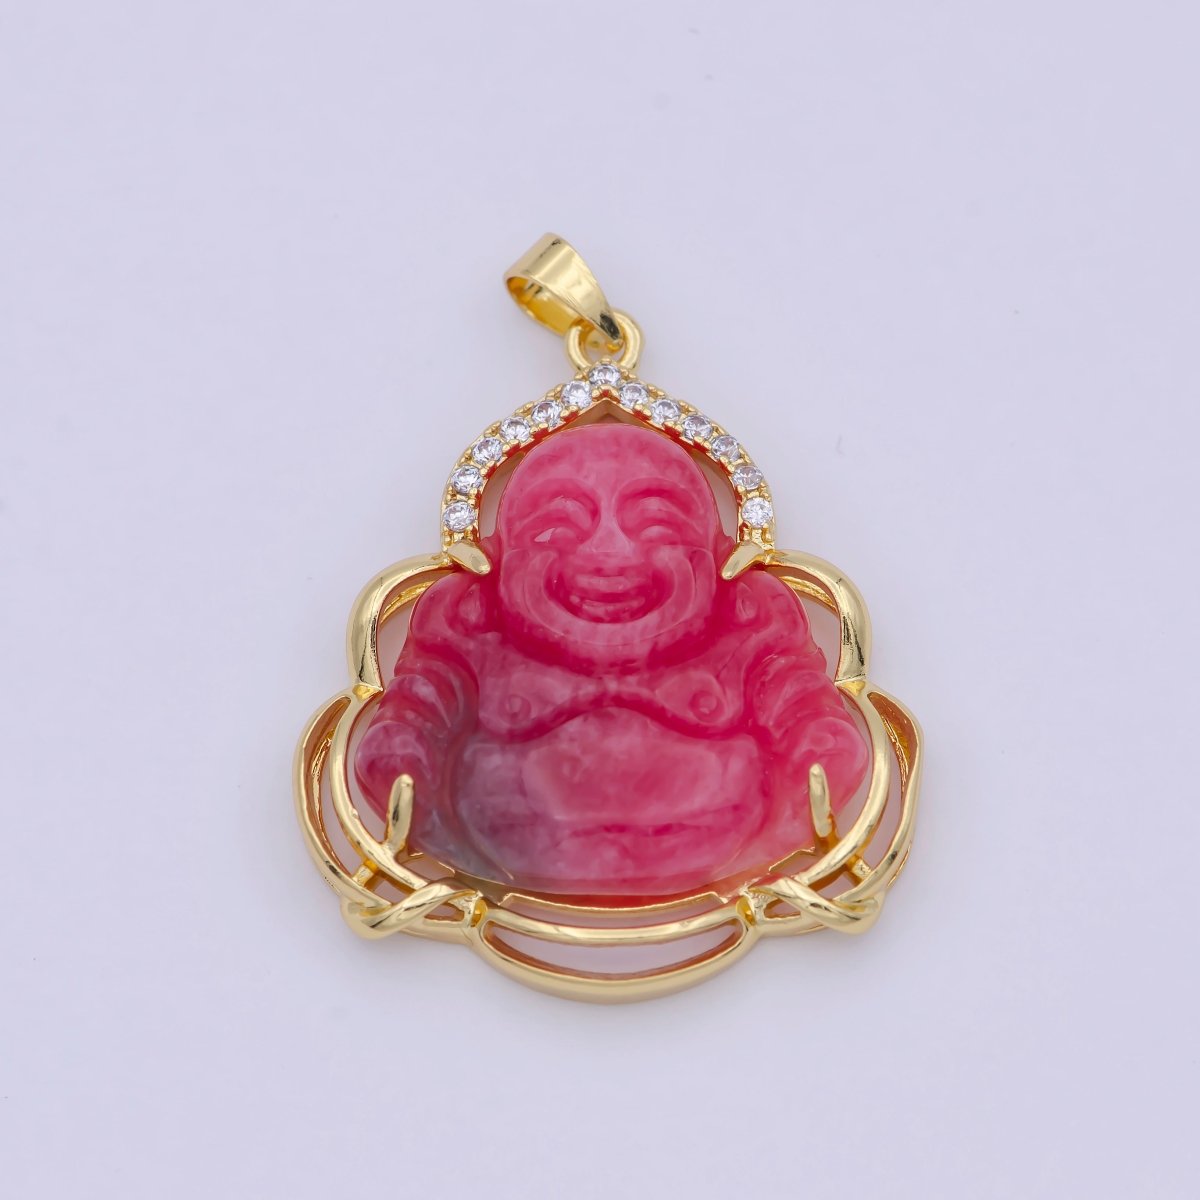 Men's Women's Real Red Jade Buddha 24k Gold Filled Pendant Fashion Statement Jewelry O-100 - DLUXCA